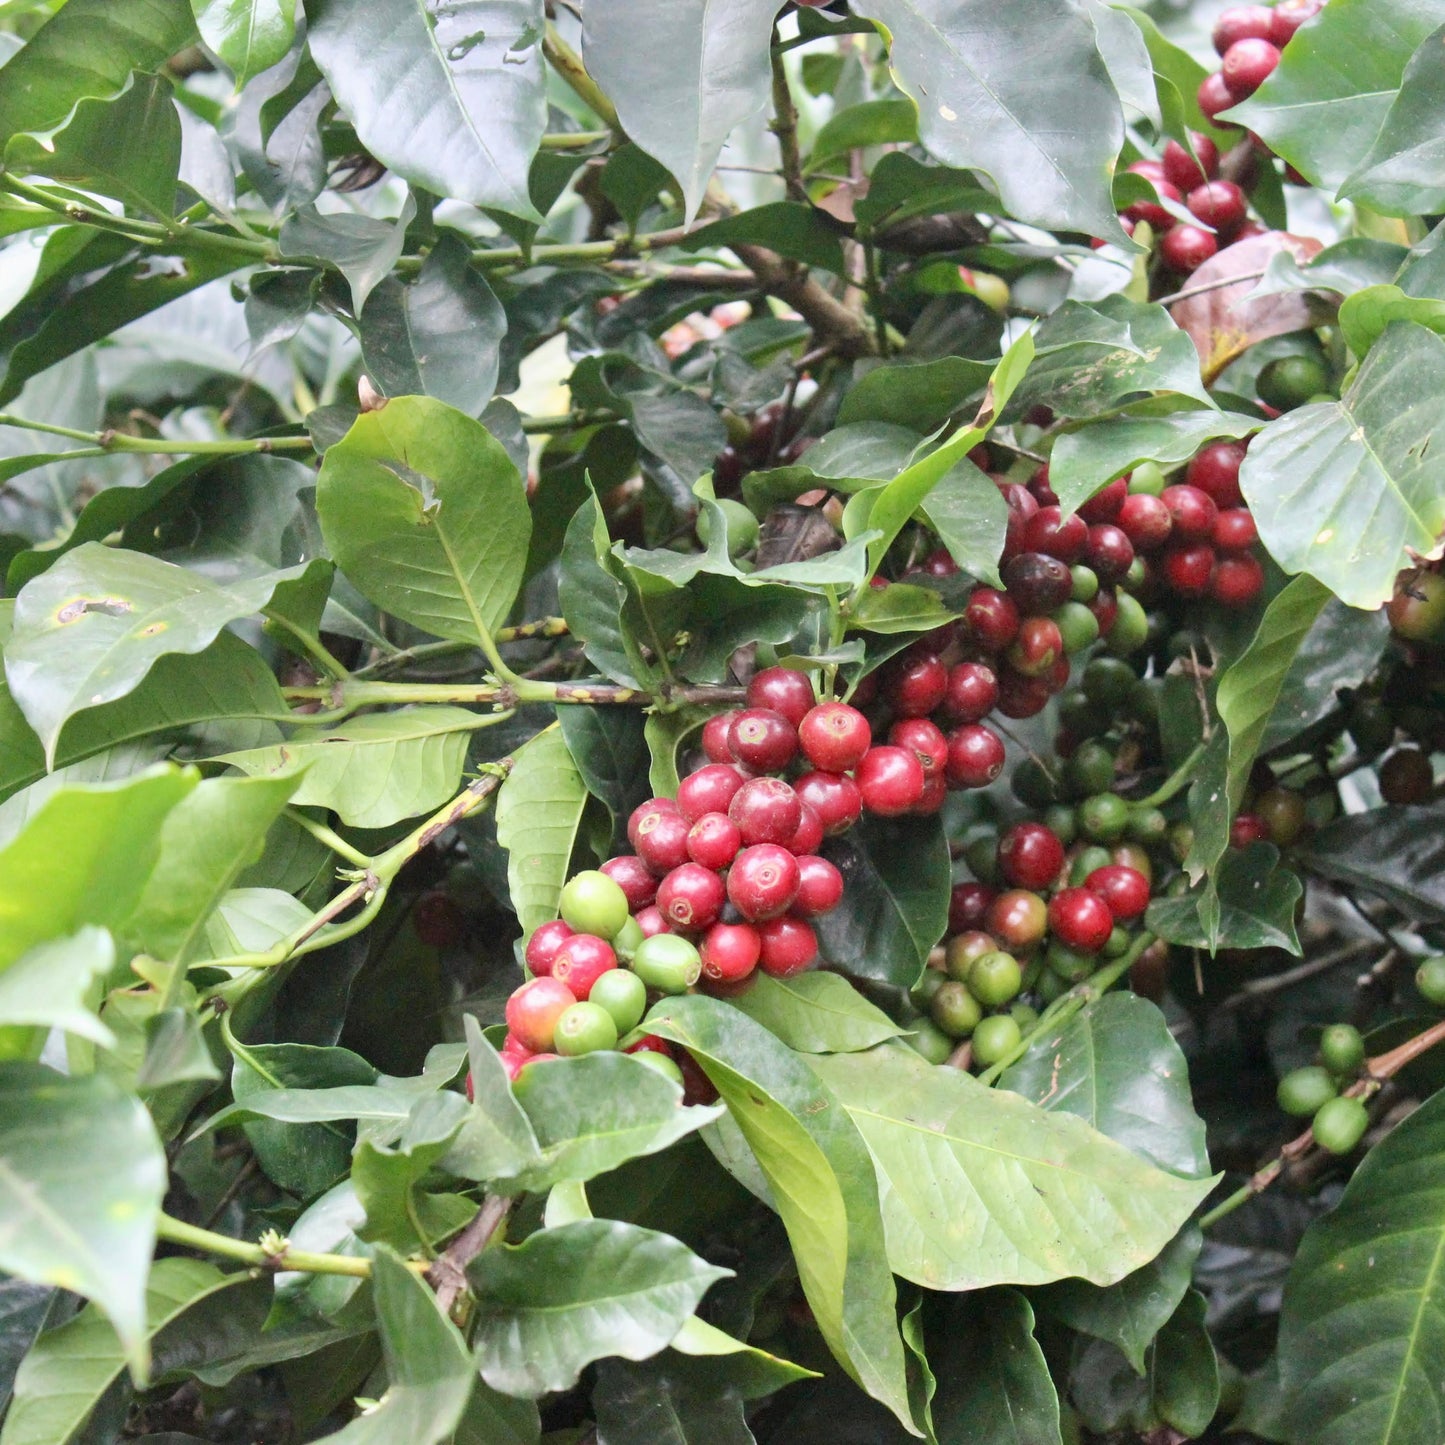 Ripening coffee cherries at La Esperanza